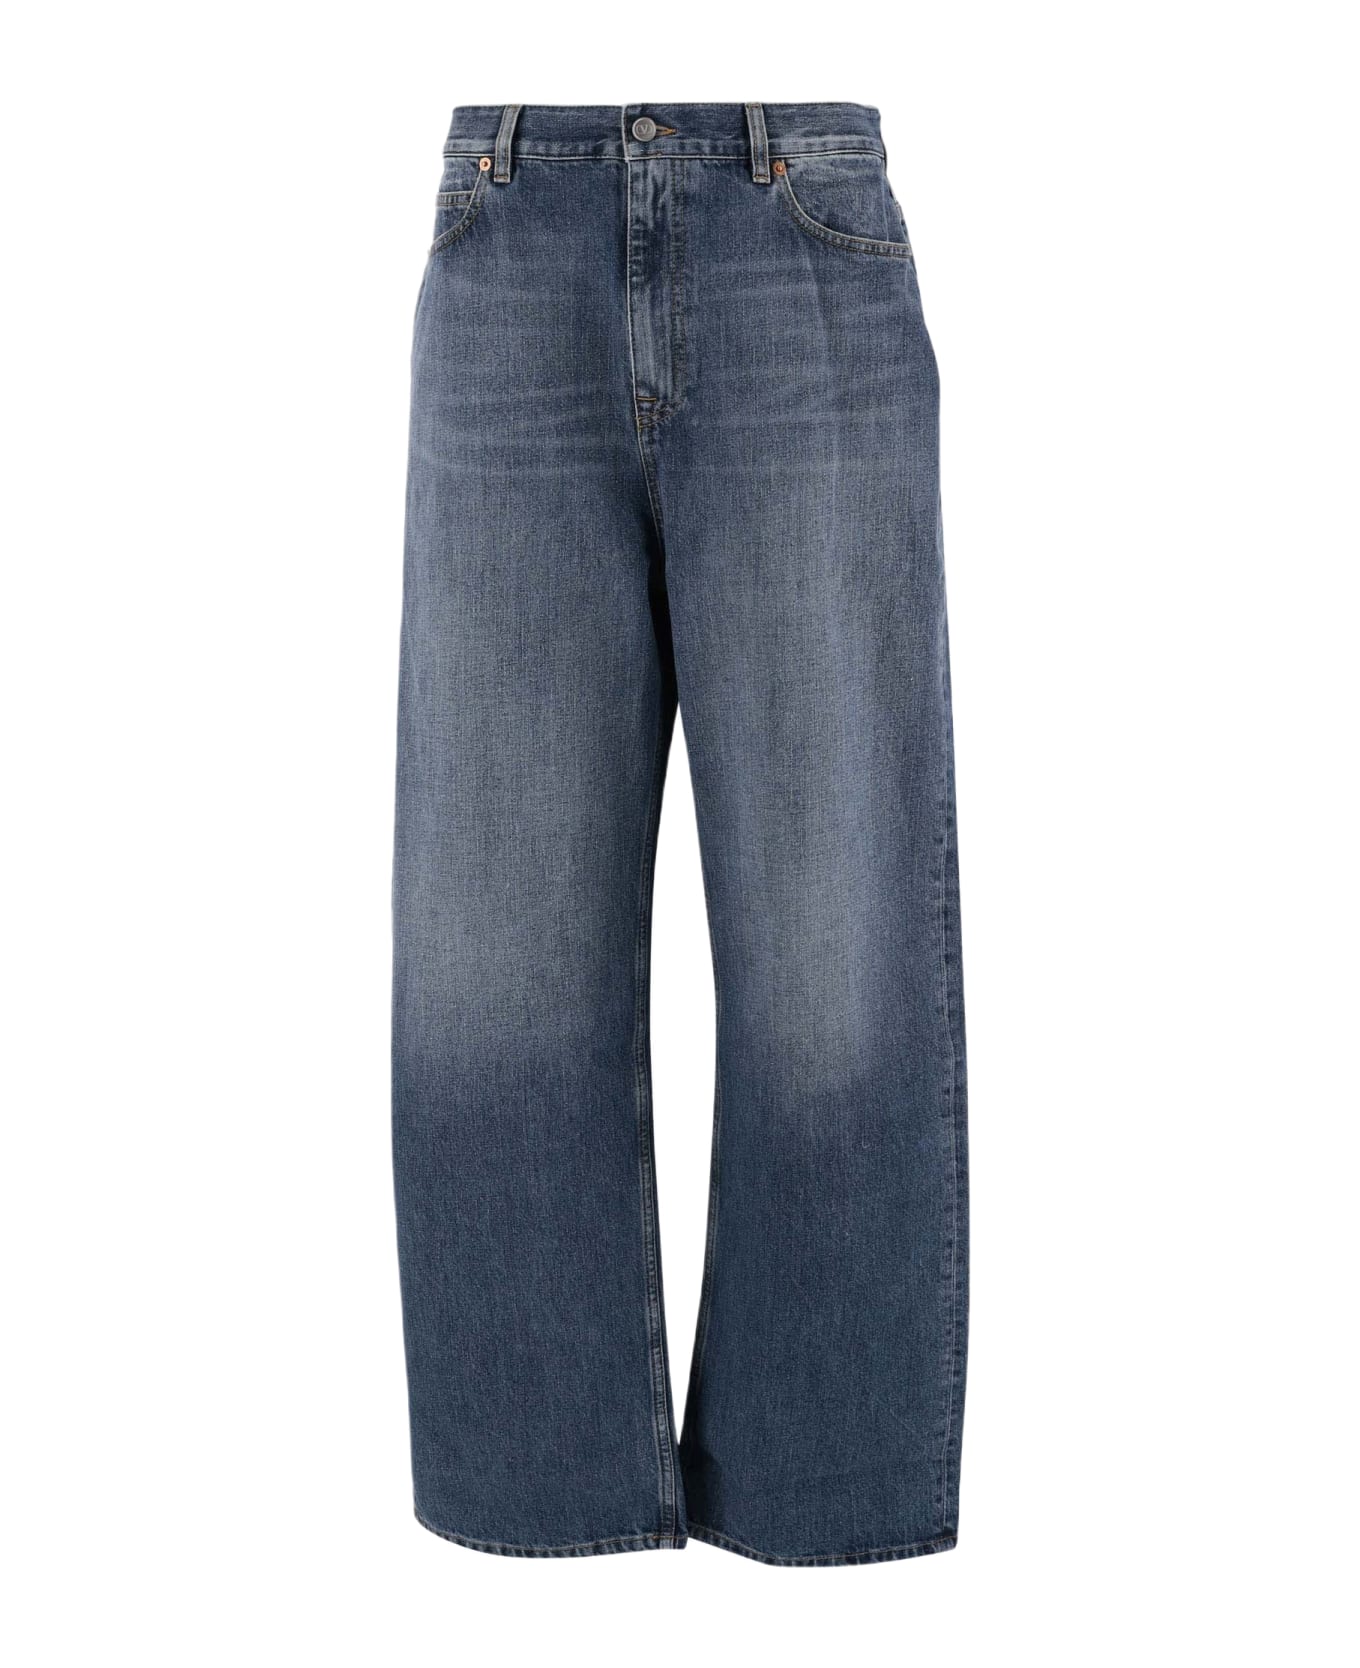 Valentino Cotton Denim Jeans - Medium blue